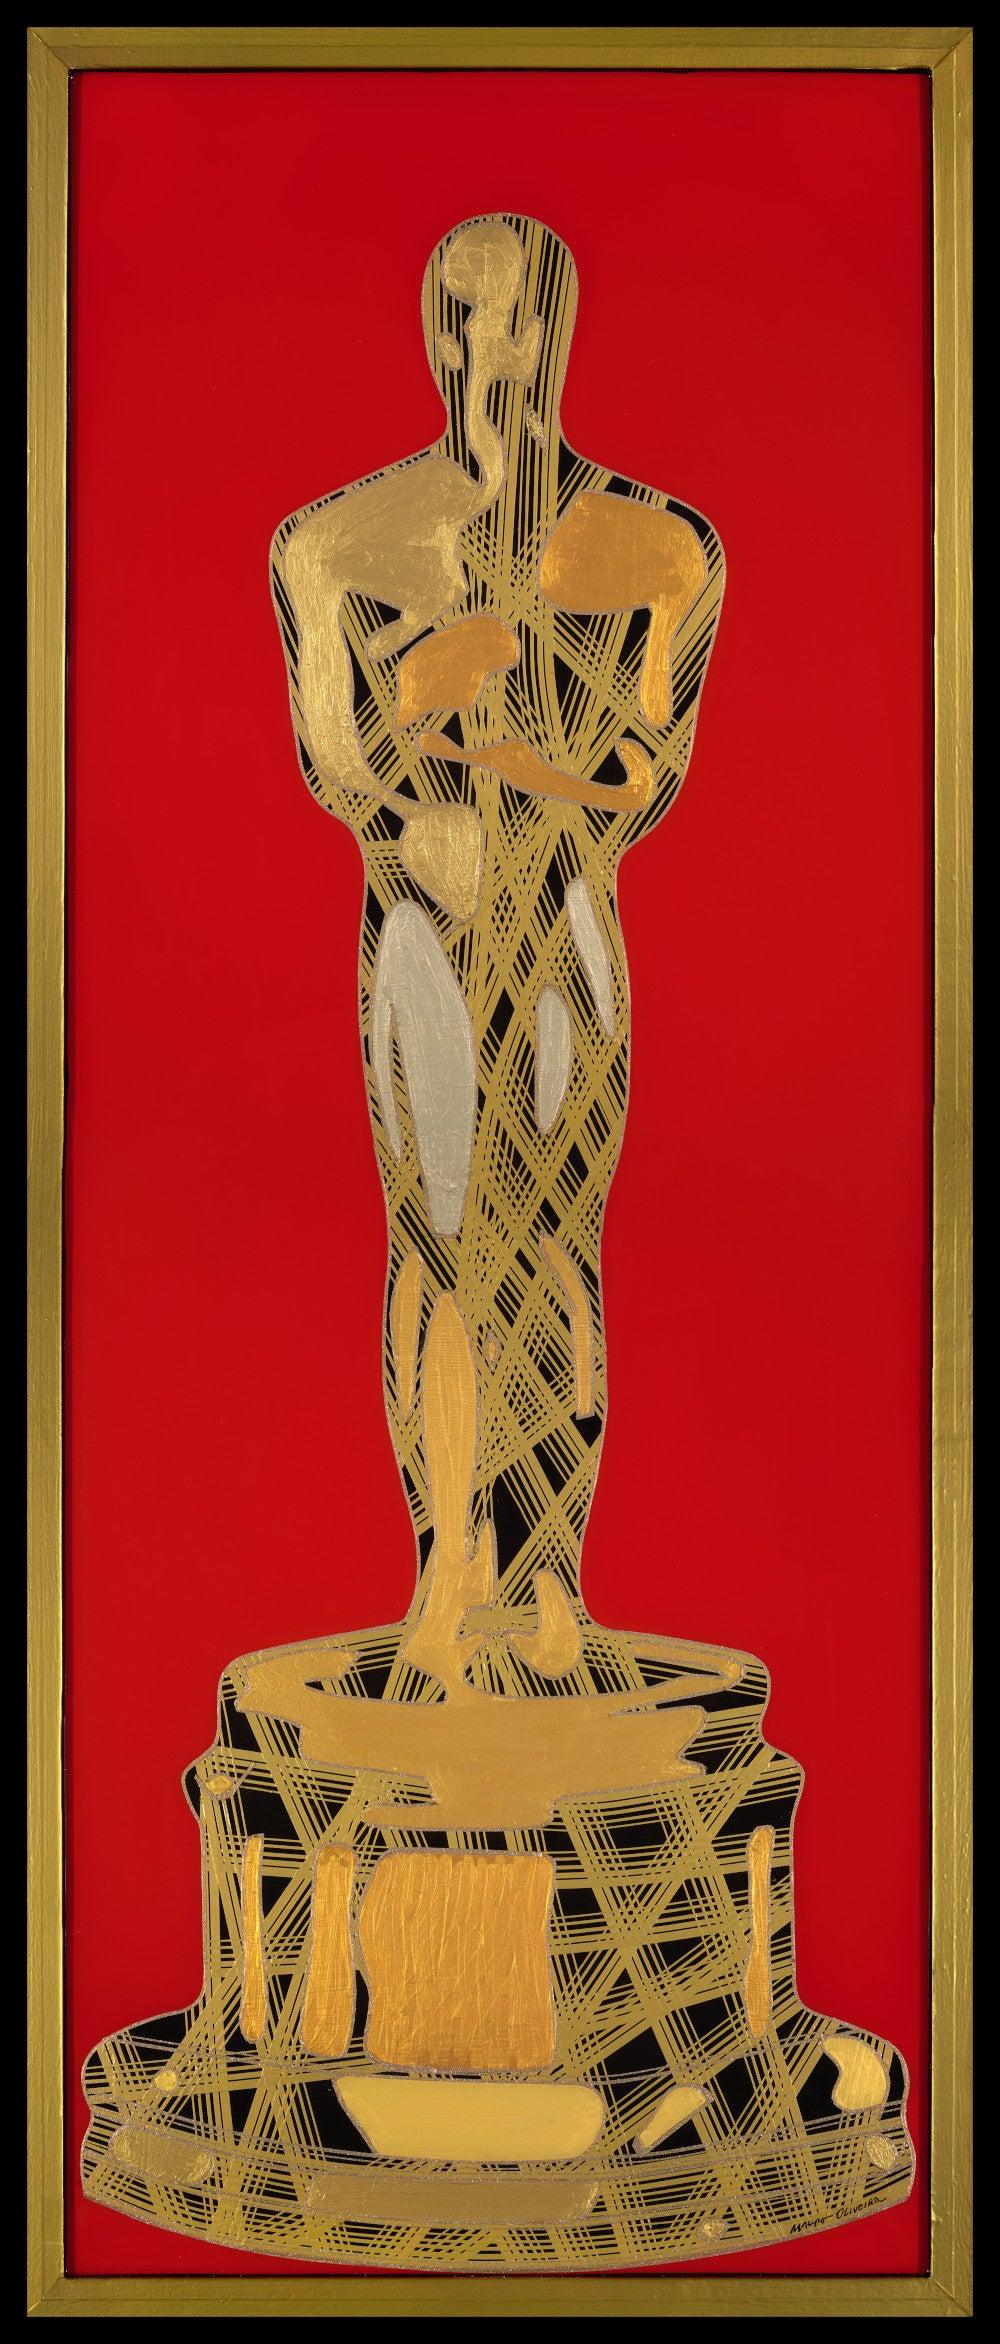 Red Carpet Oscar (Limited Edition Print)